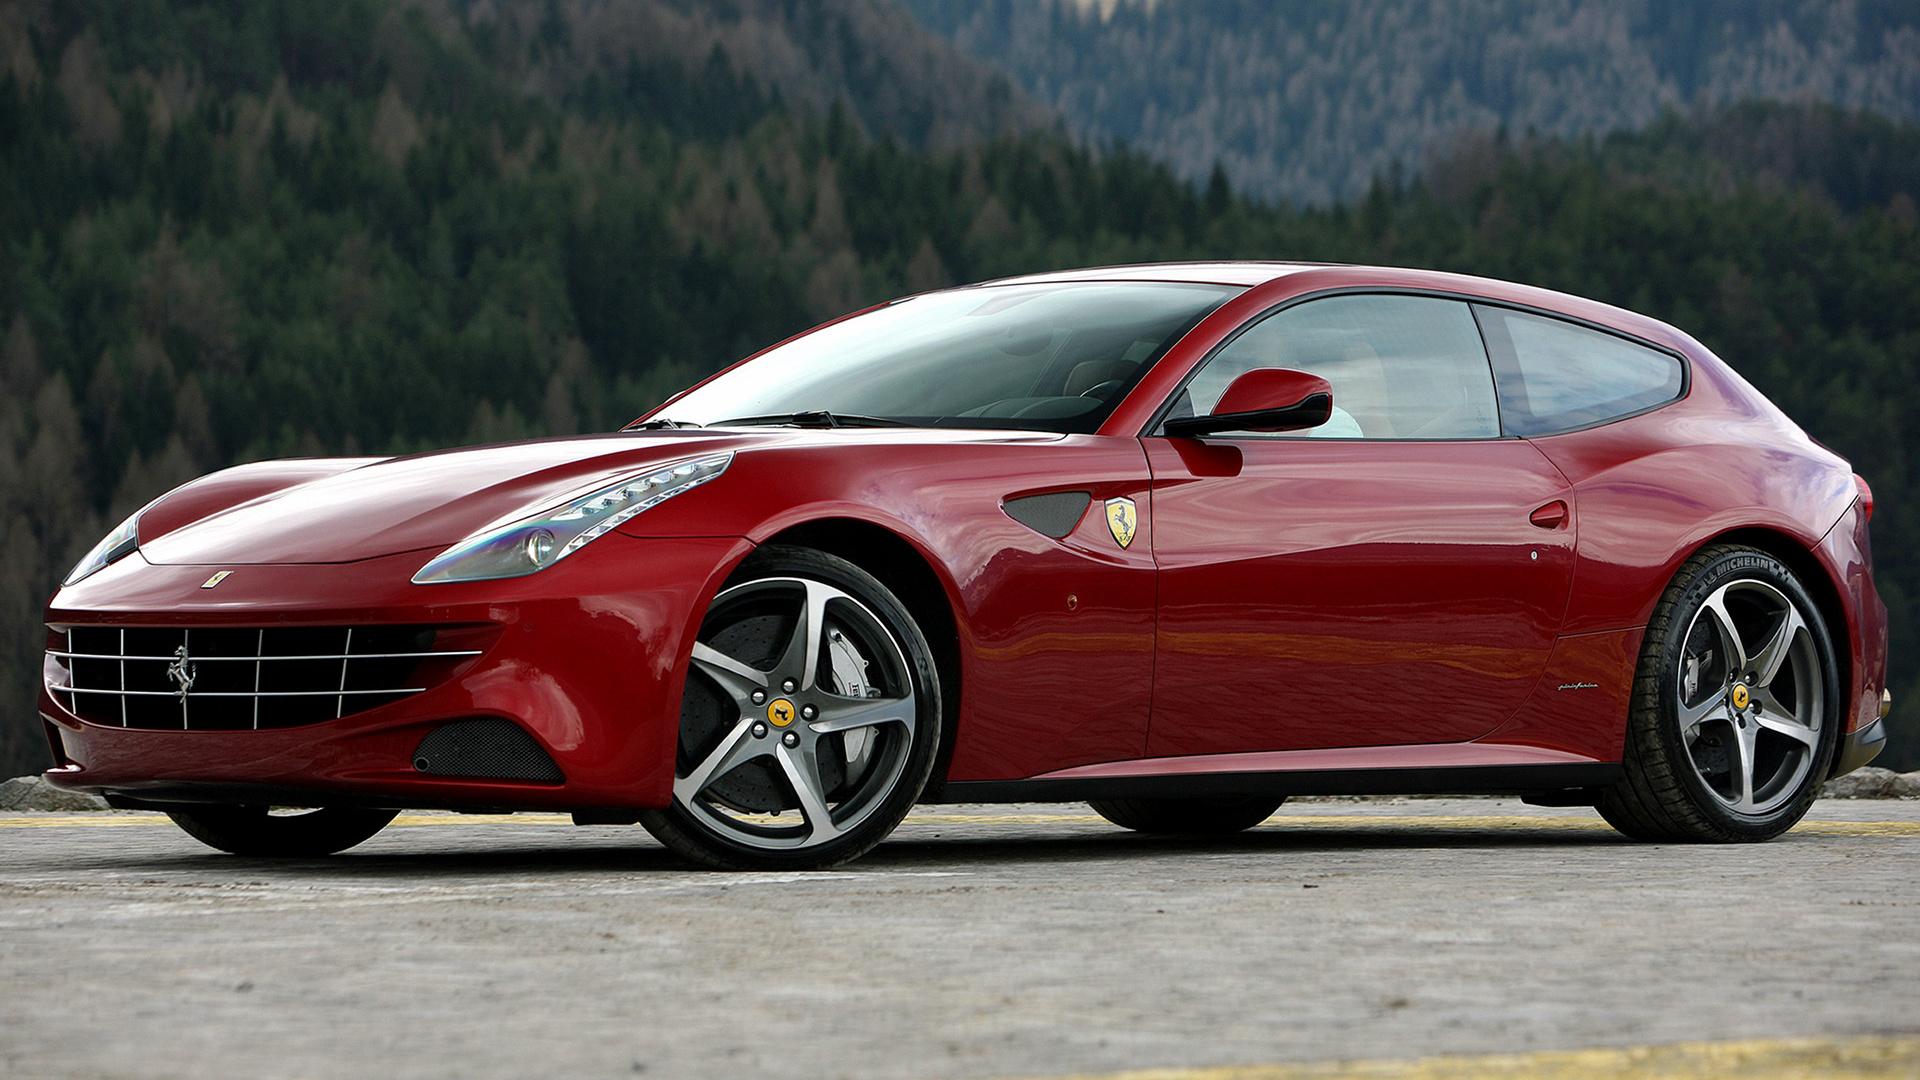 Ferrari FF and HD Image